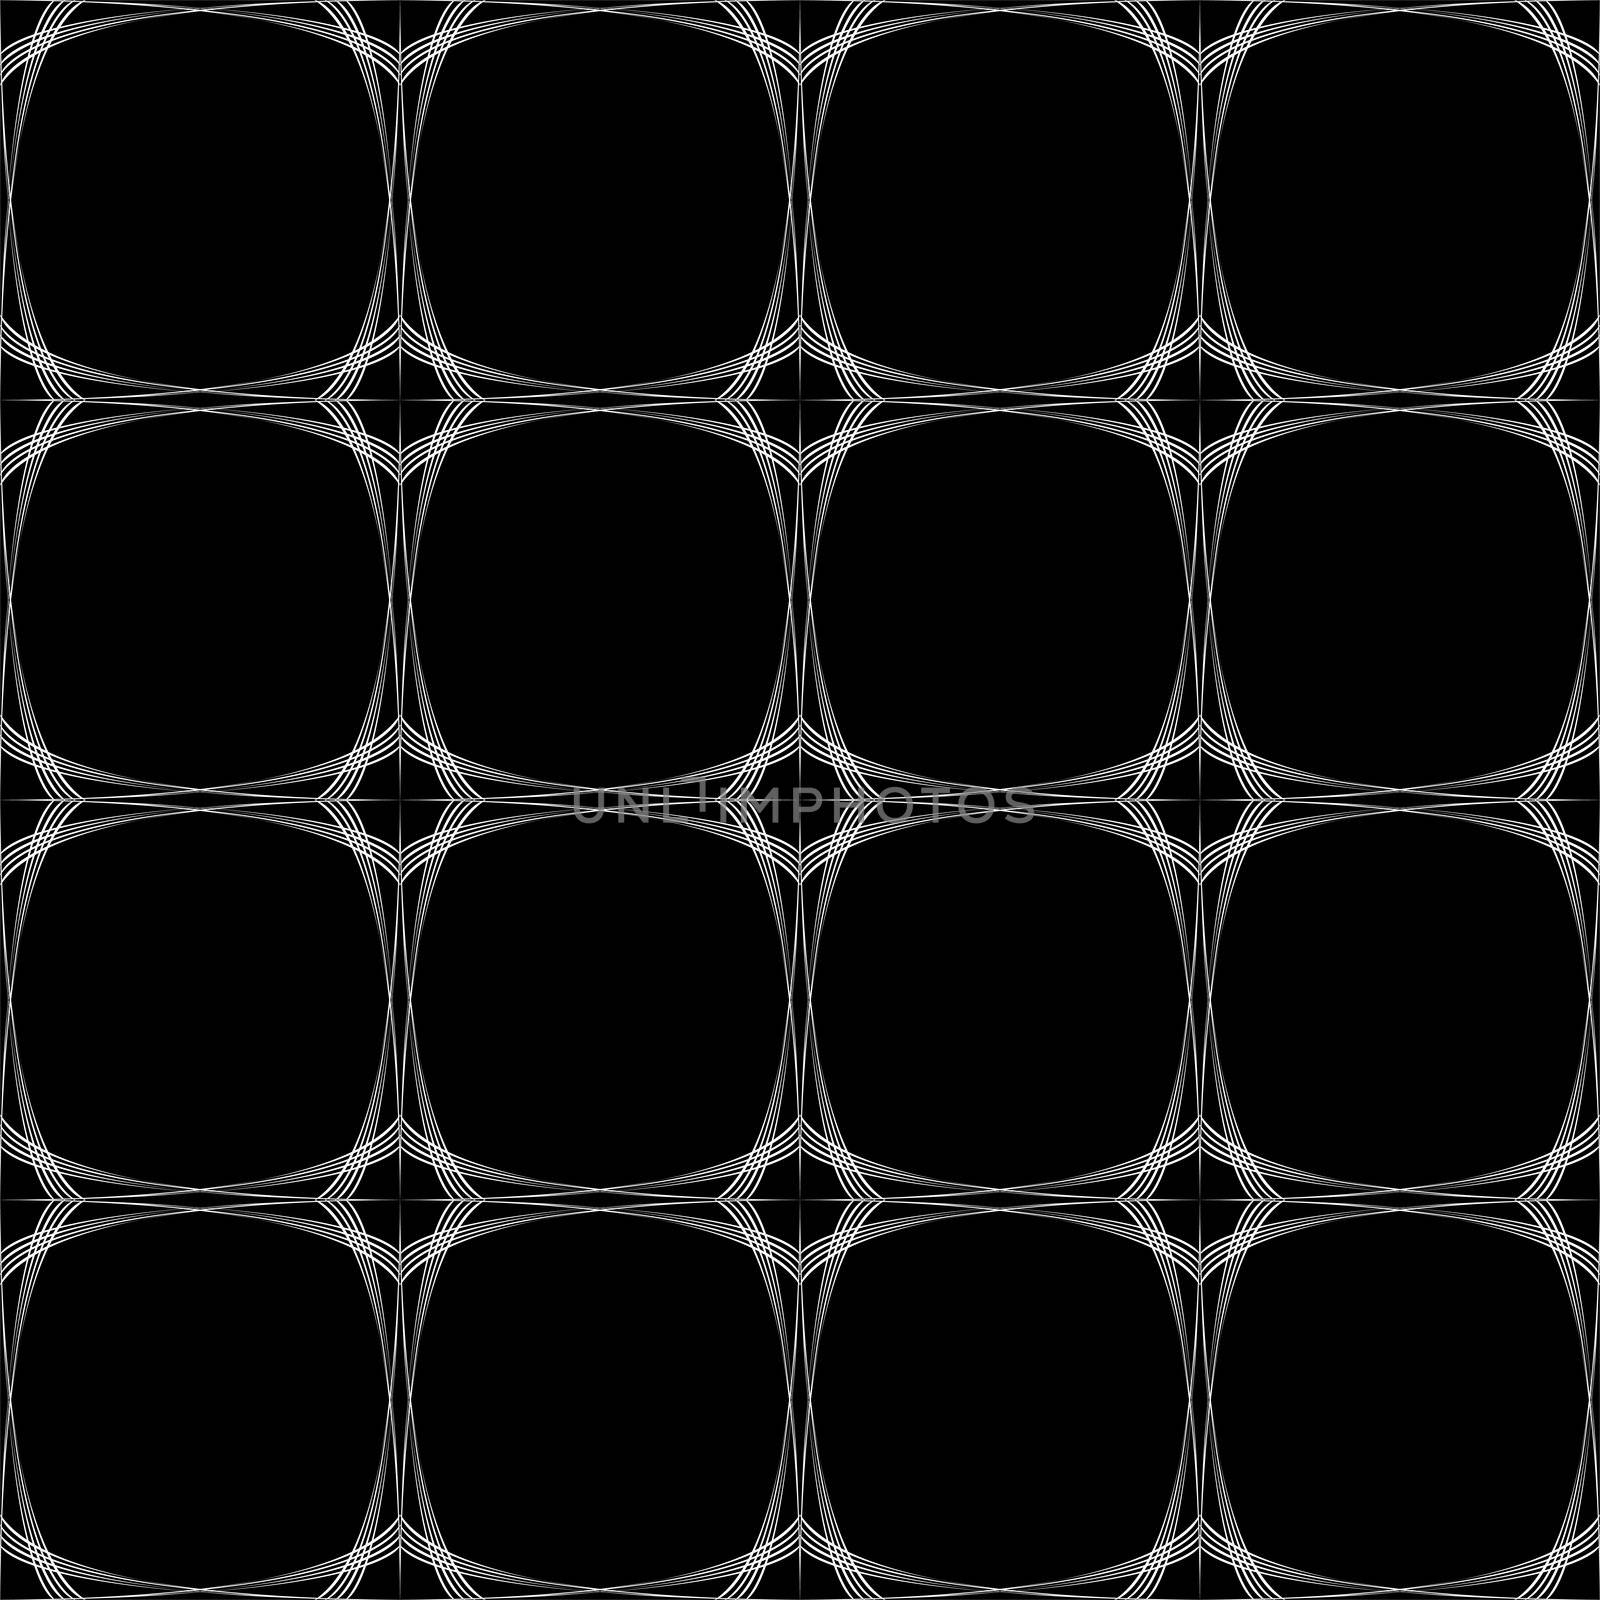 white waves geometric pattern by robertosch